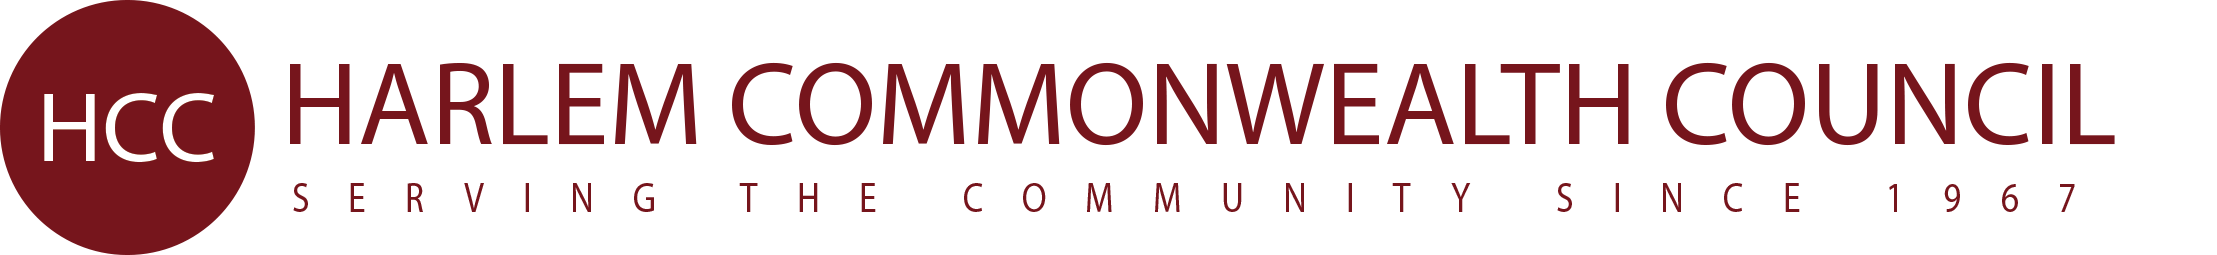 Harlem Commonwealth Council logo